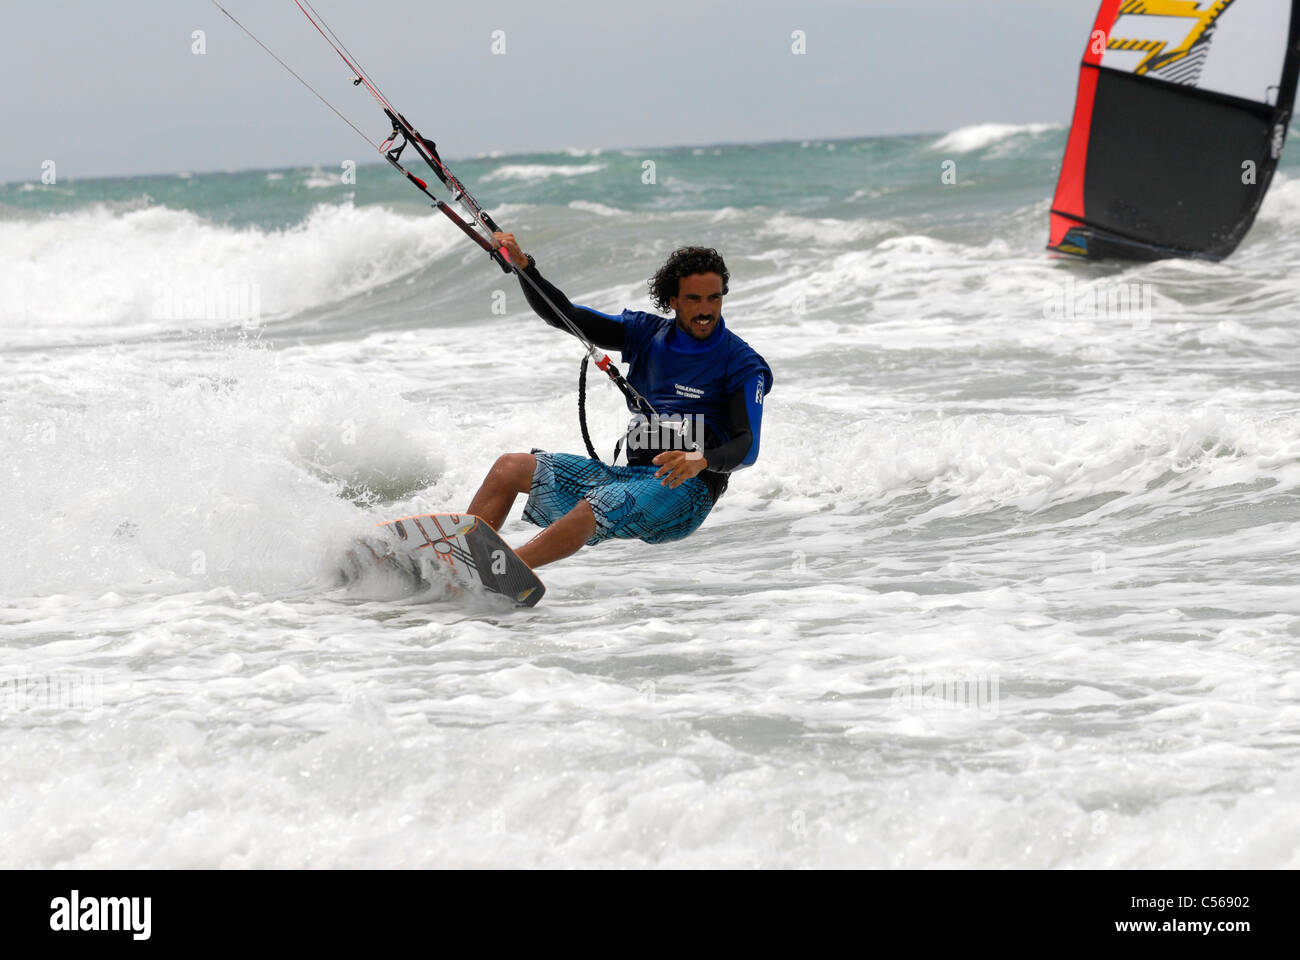 Kitesurfer in Aktion Stockfoto